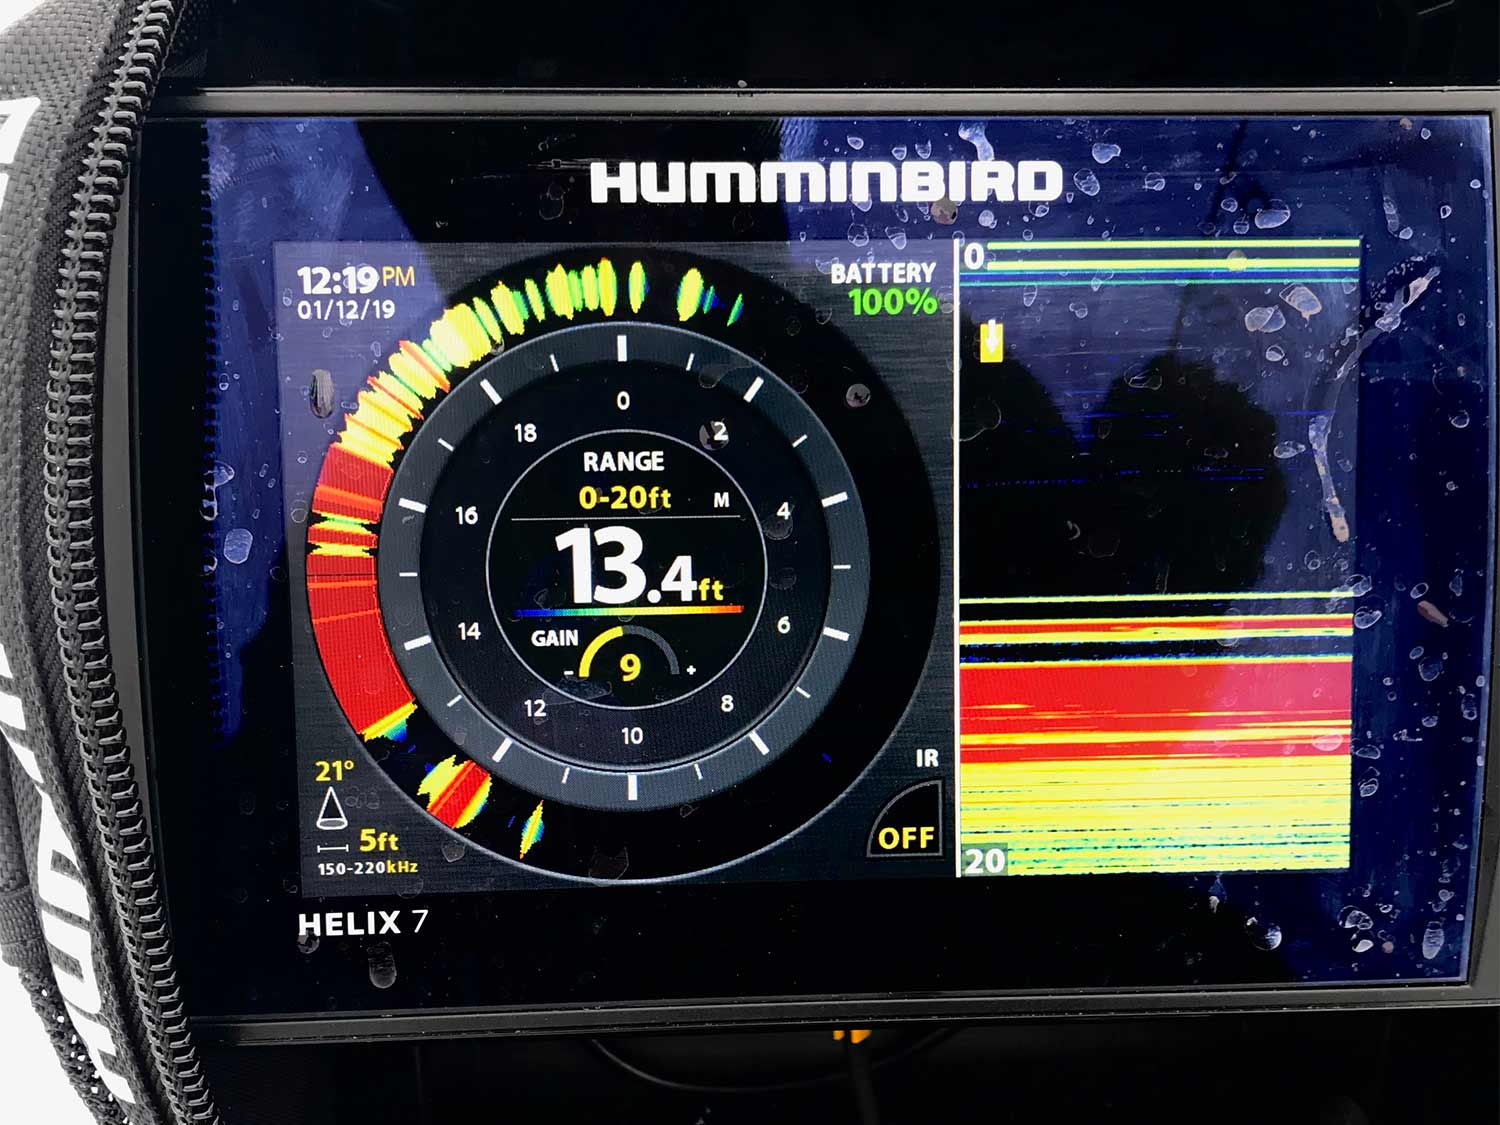 Sonar panel on humminbird fish monitor.